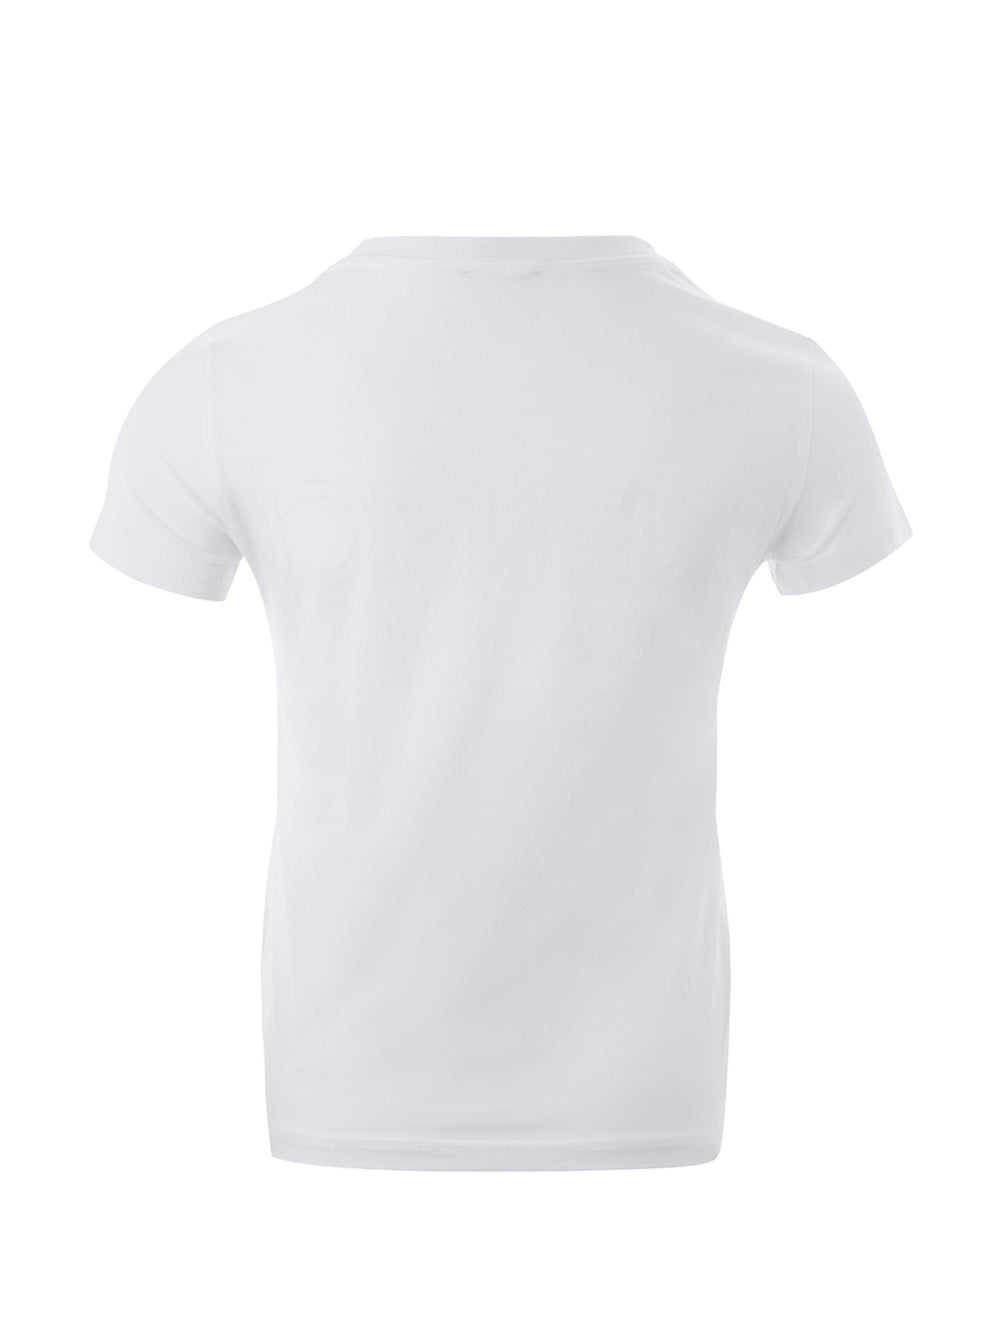 Camiseta Kenzo blanca con logo de camuflaje